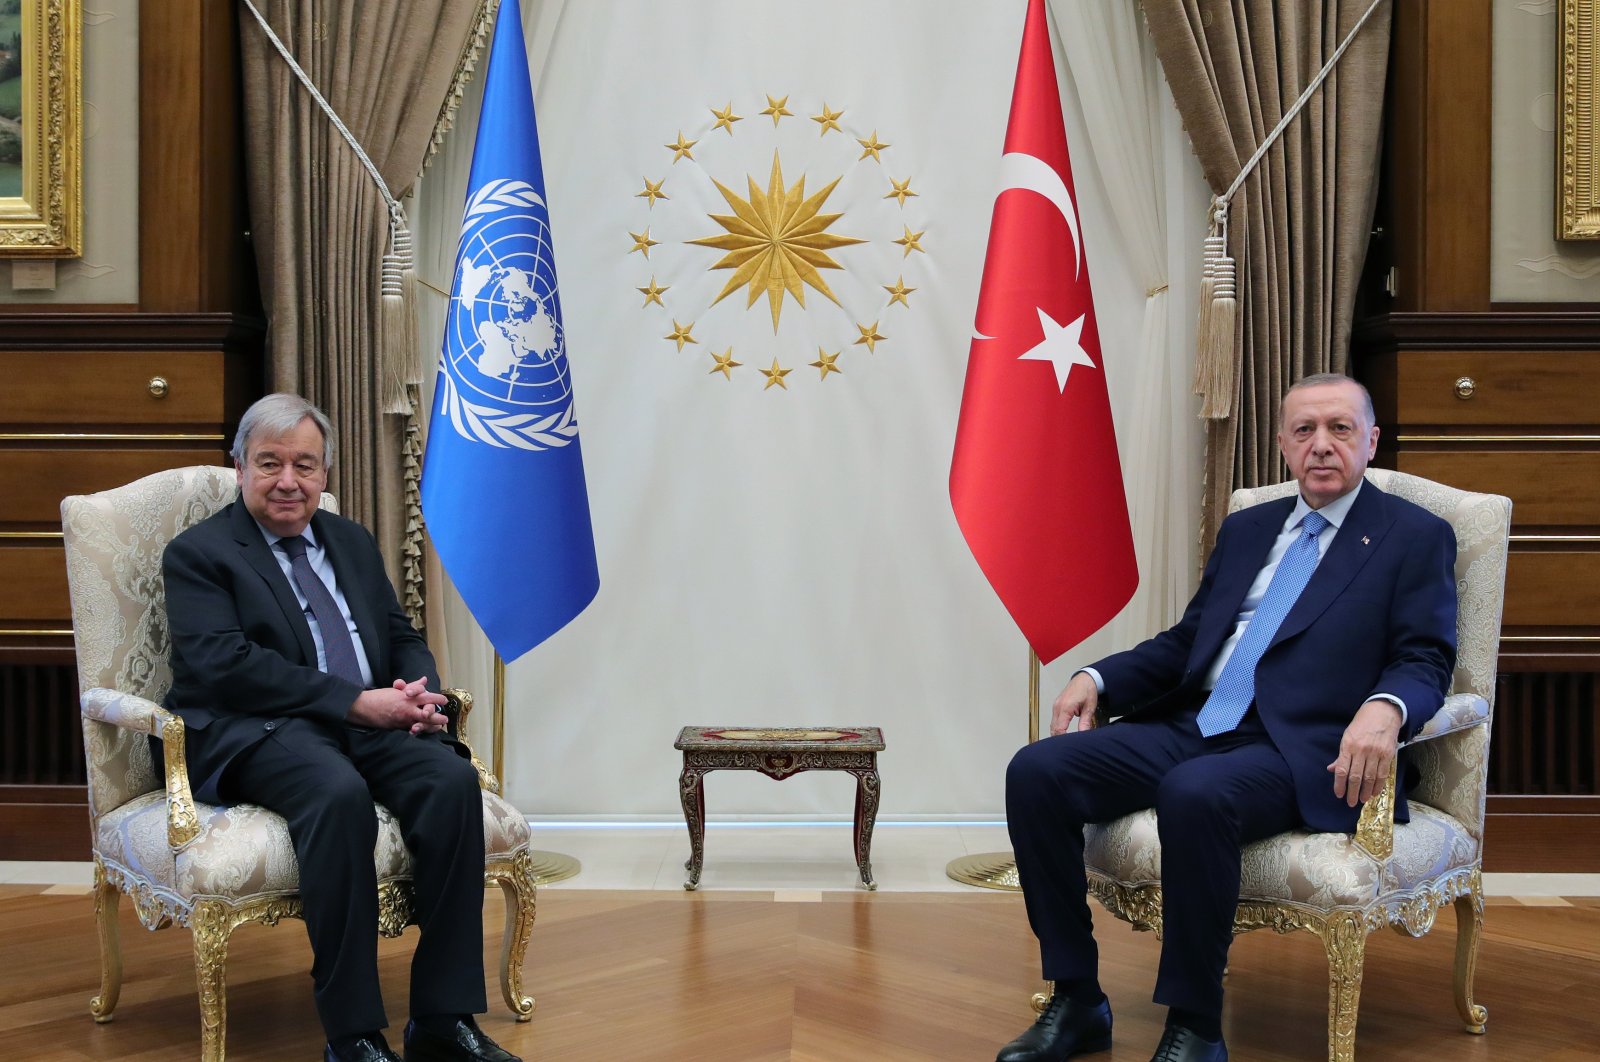 President Recep Tayyip Erdoğan and United Nations Secretary-General Antonio Guterres meet in the capital Ankara, Turkey, April 25, 2022. (EPA Photo)